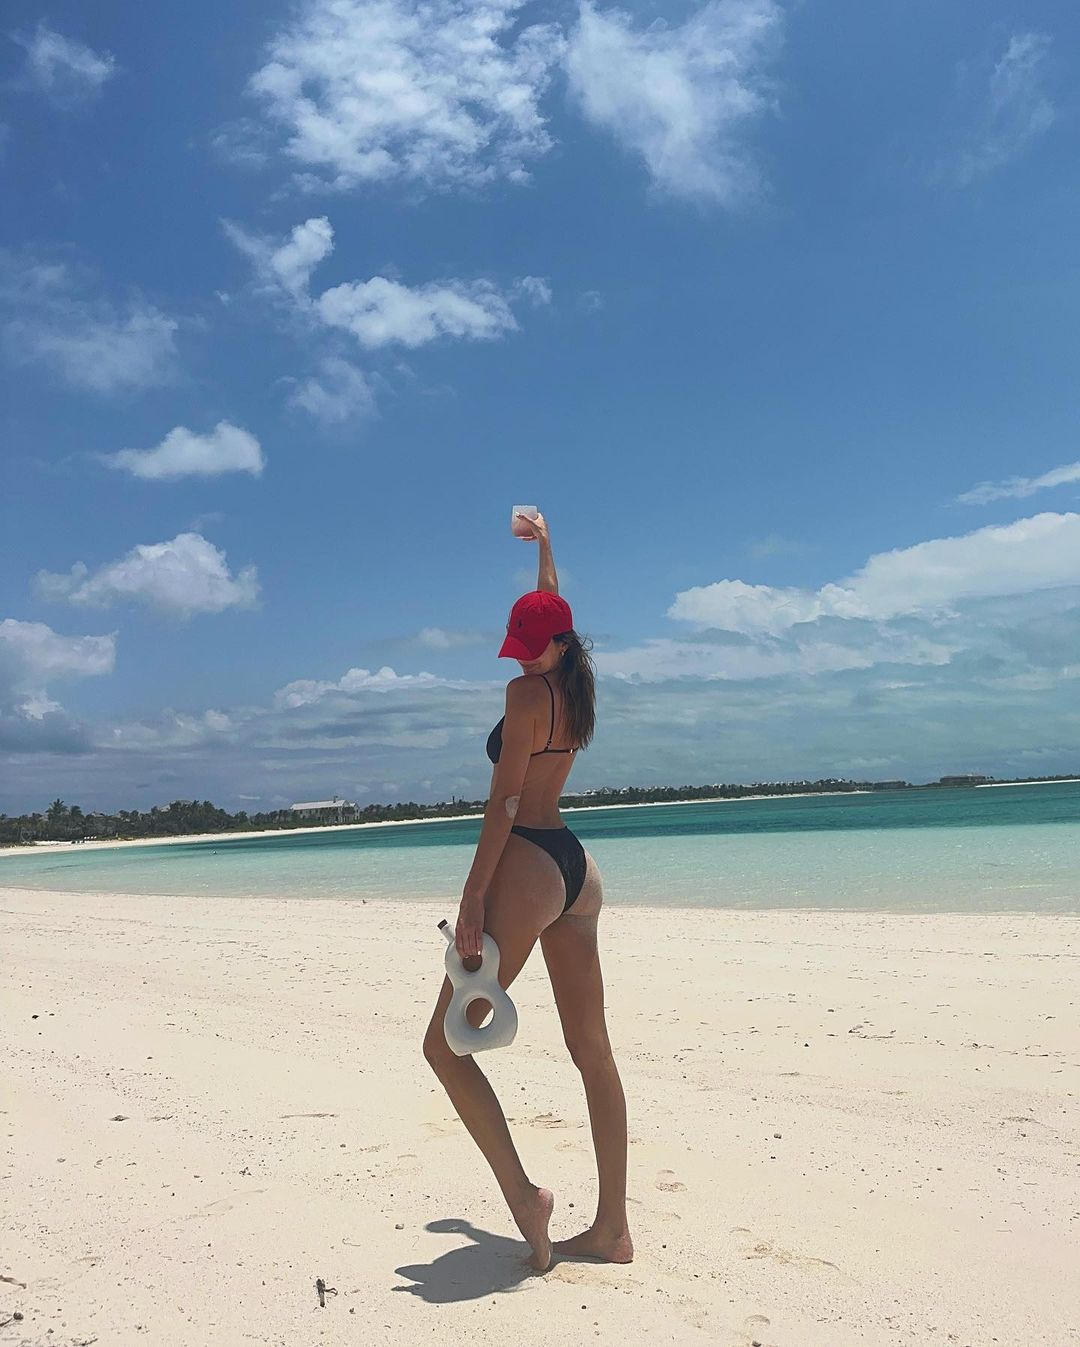 Photos n°6 : Life’s a Beach for Kendall Jenner!